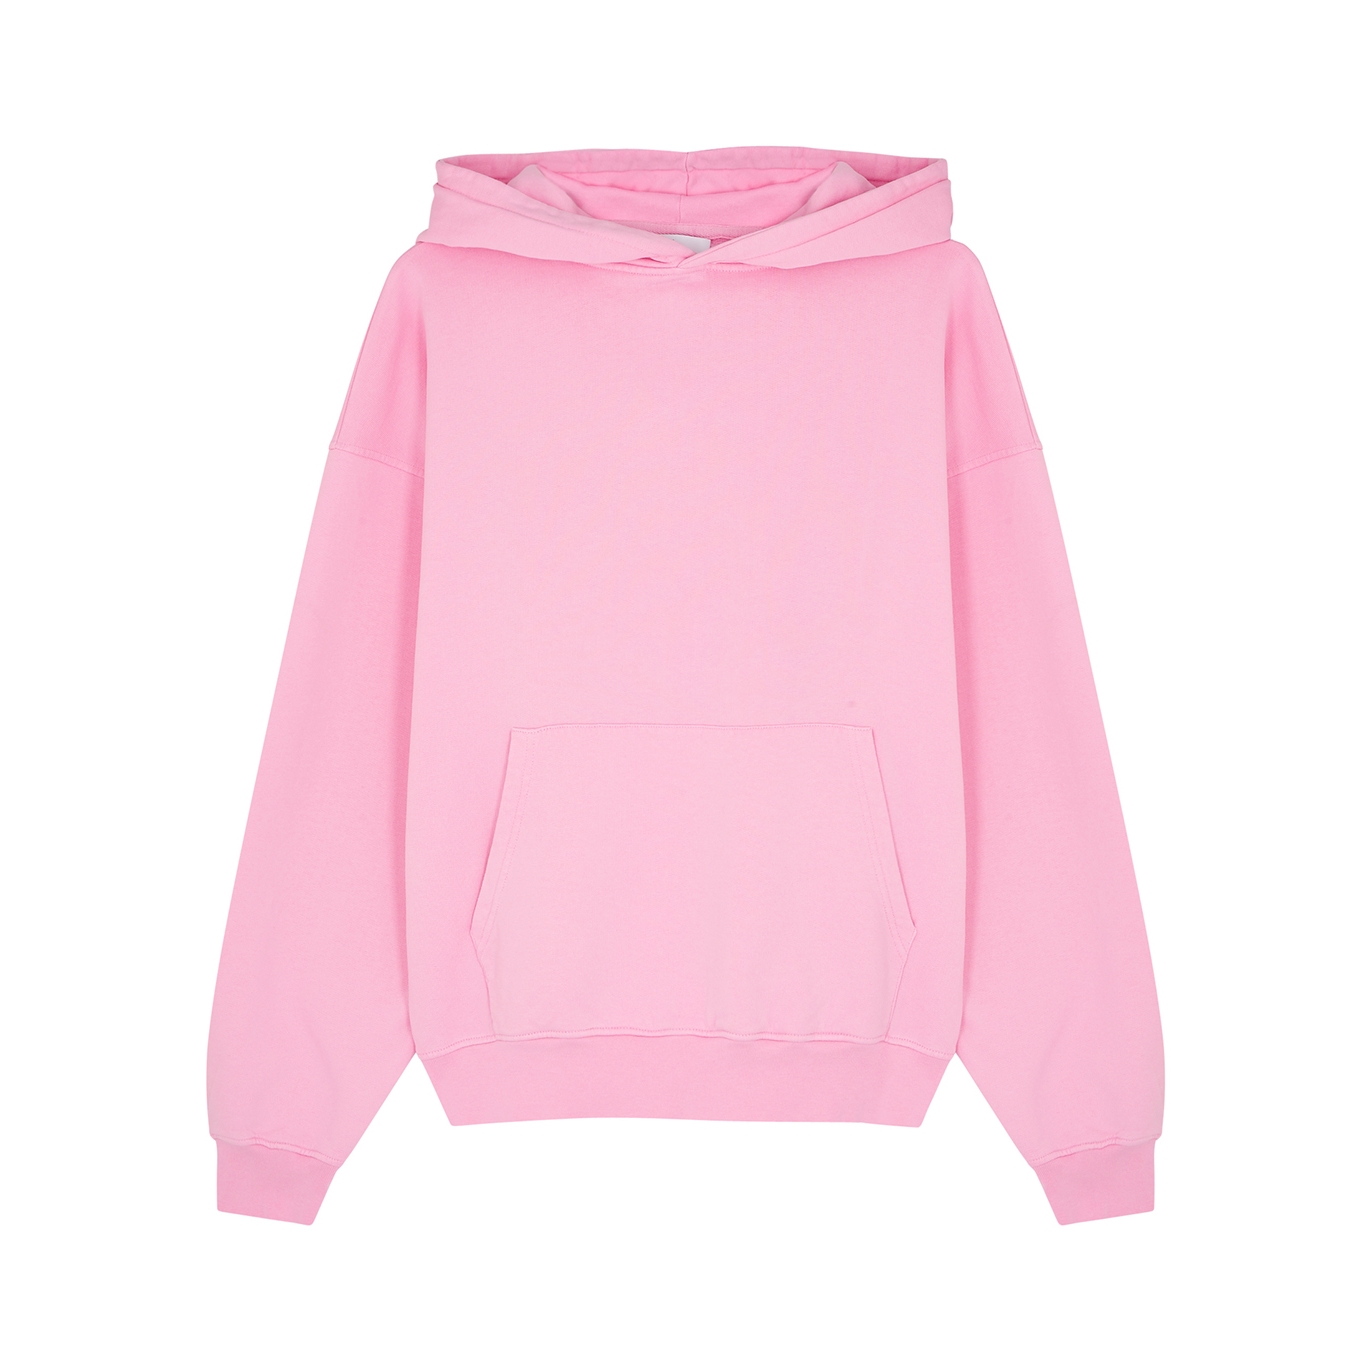 Colorful Standard Pink Hooded Cotton Sweatshirt